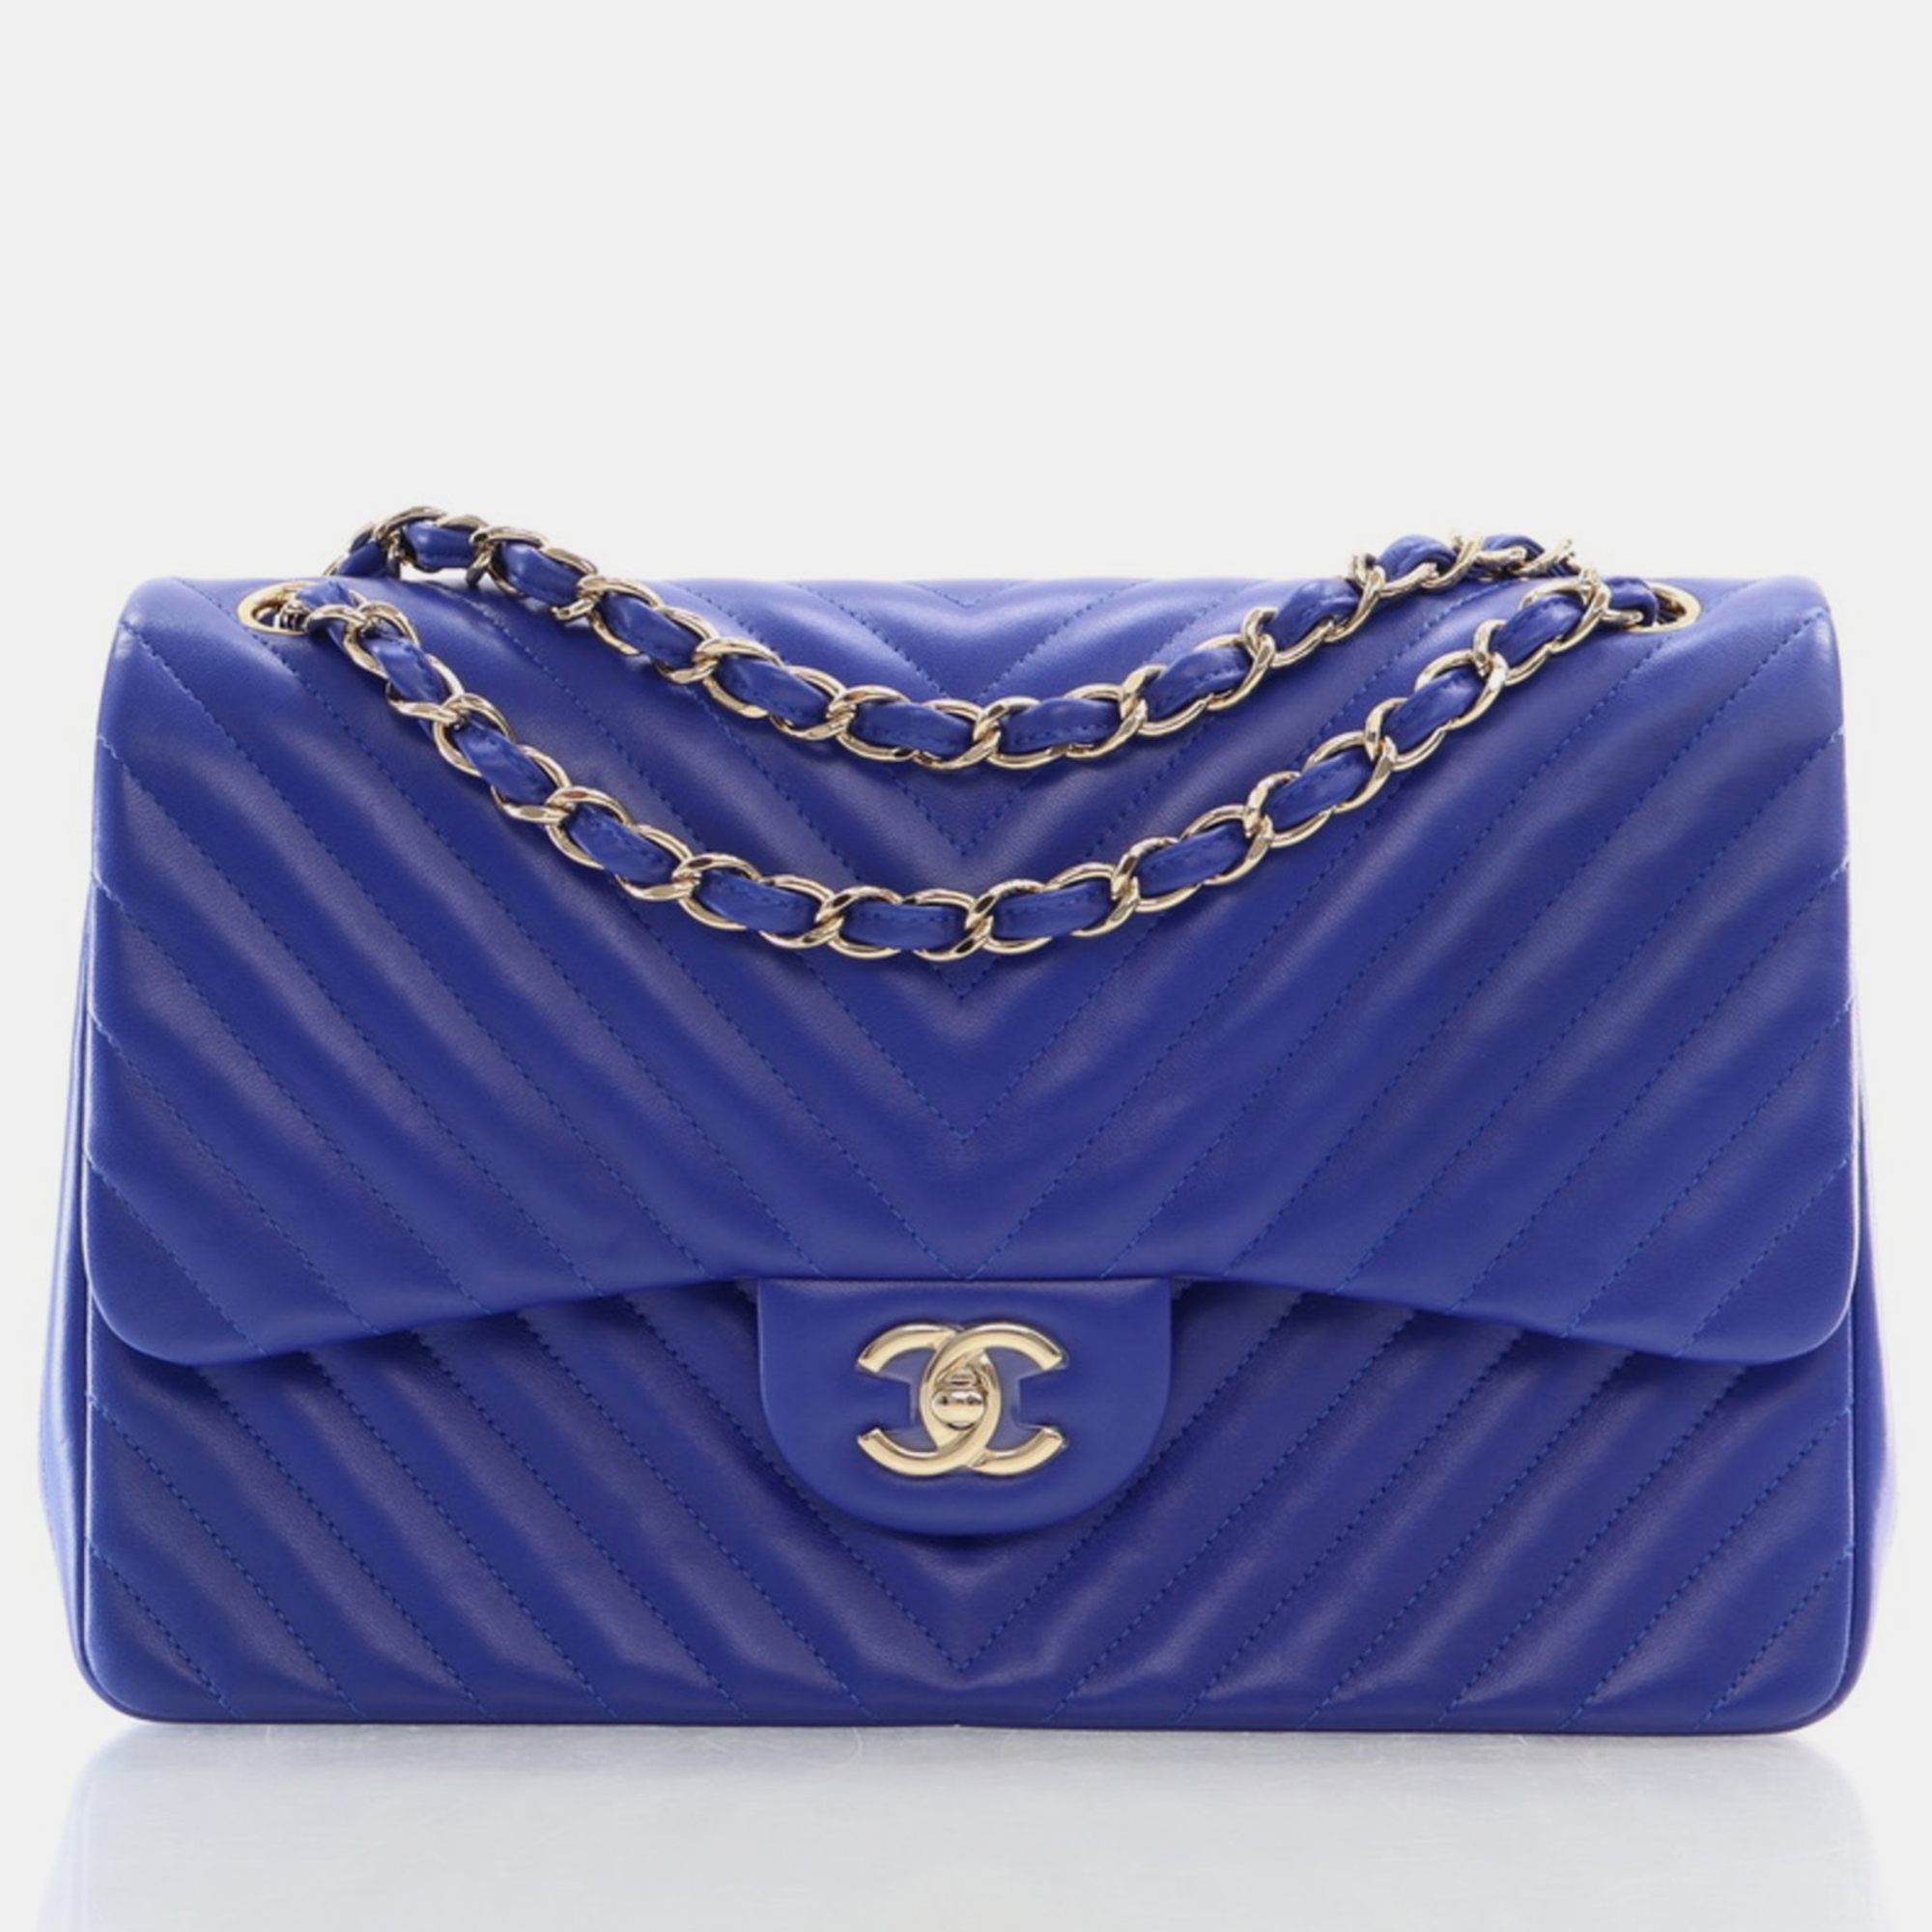 Chanel blue chevron lambskin medium classic double flap bag